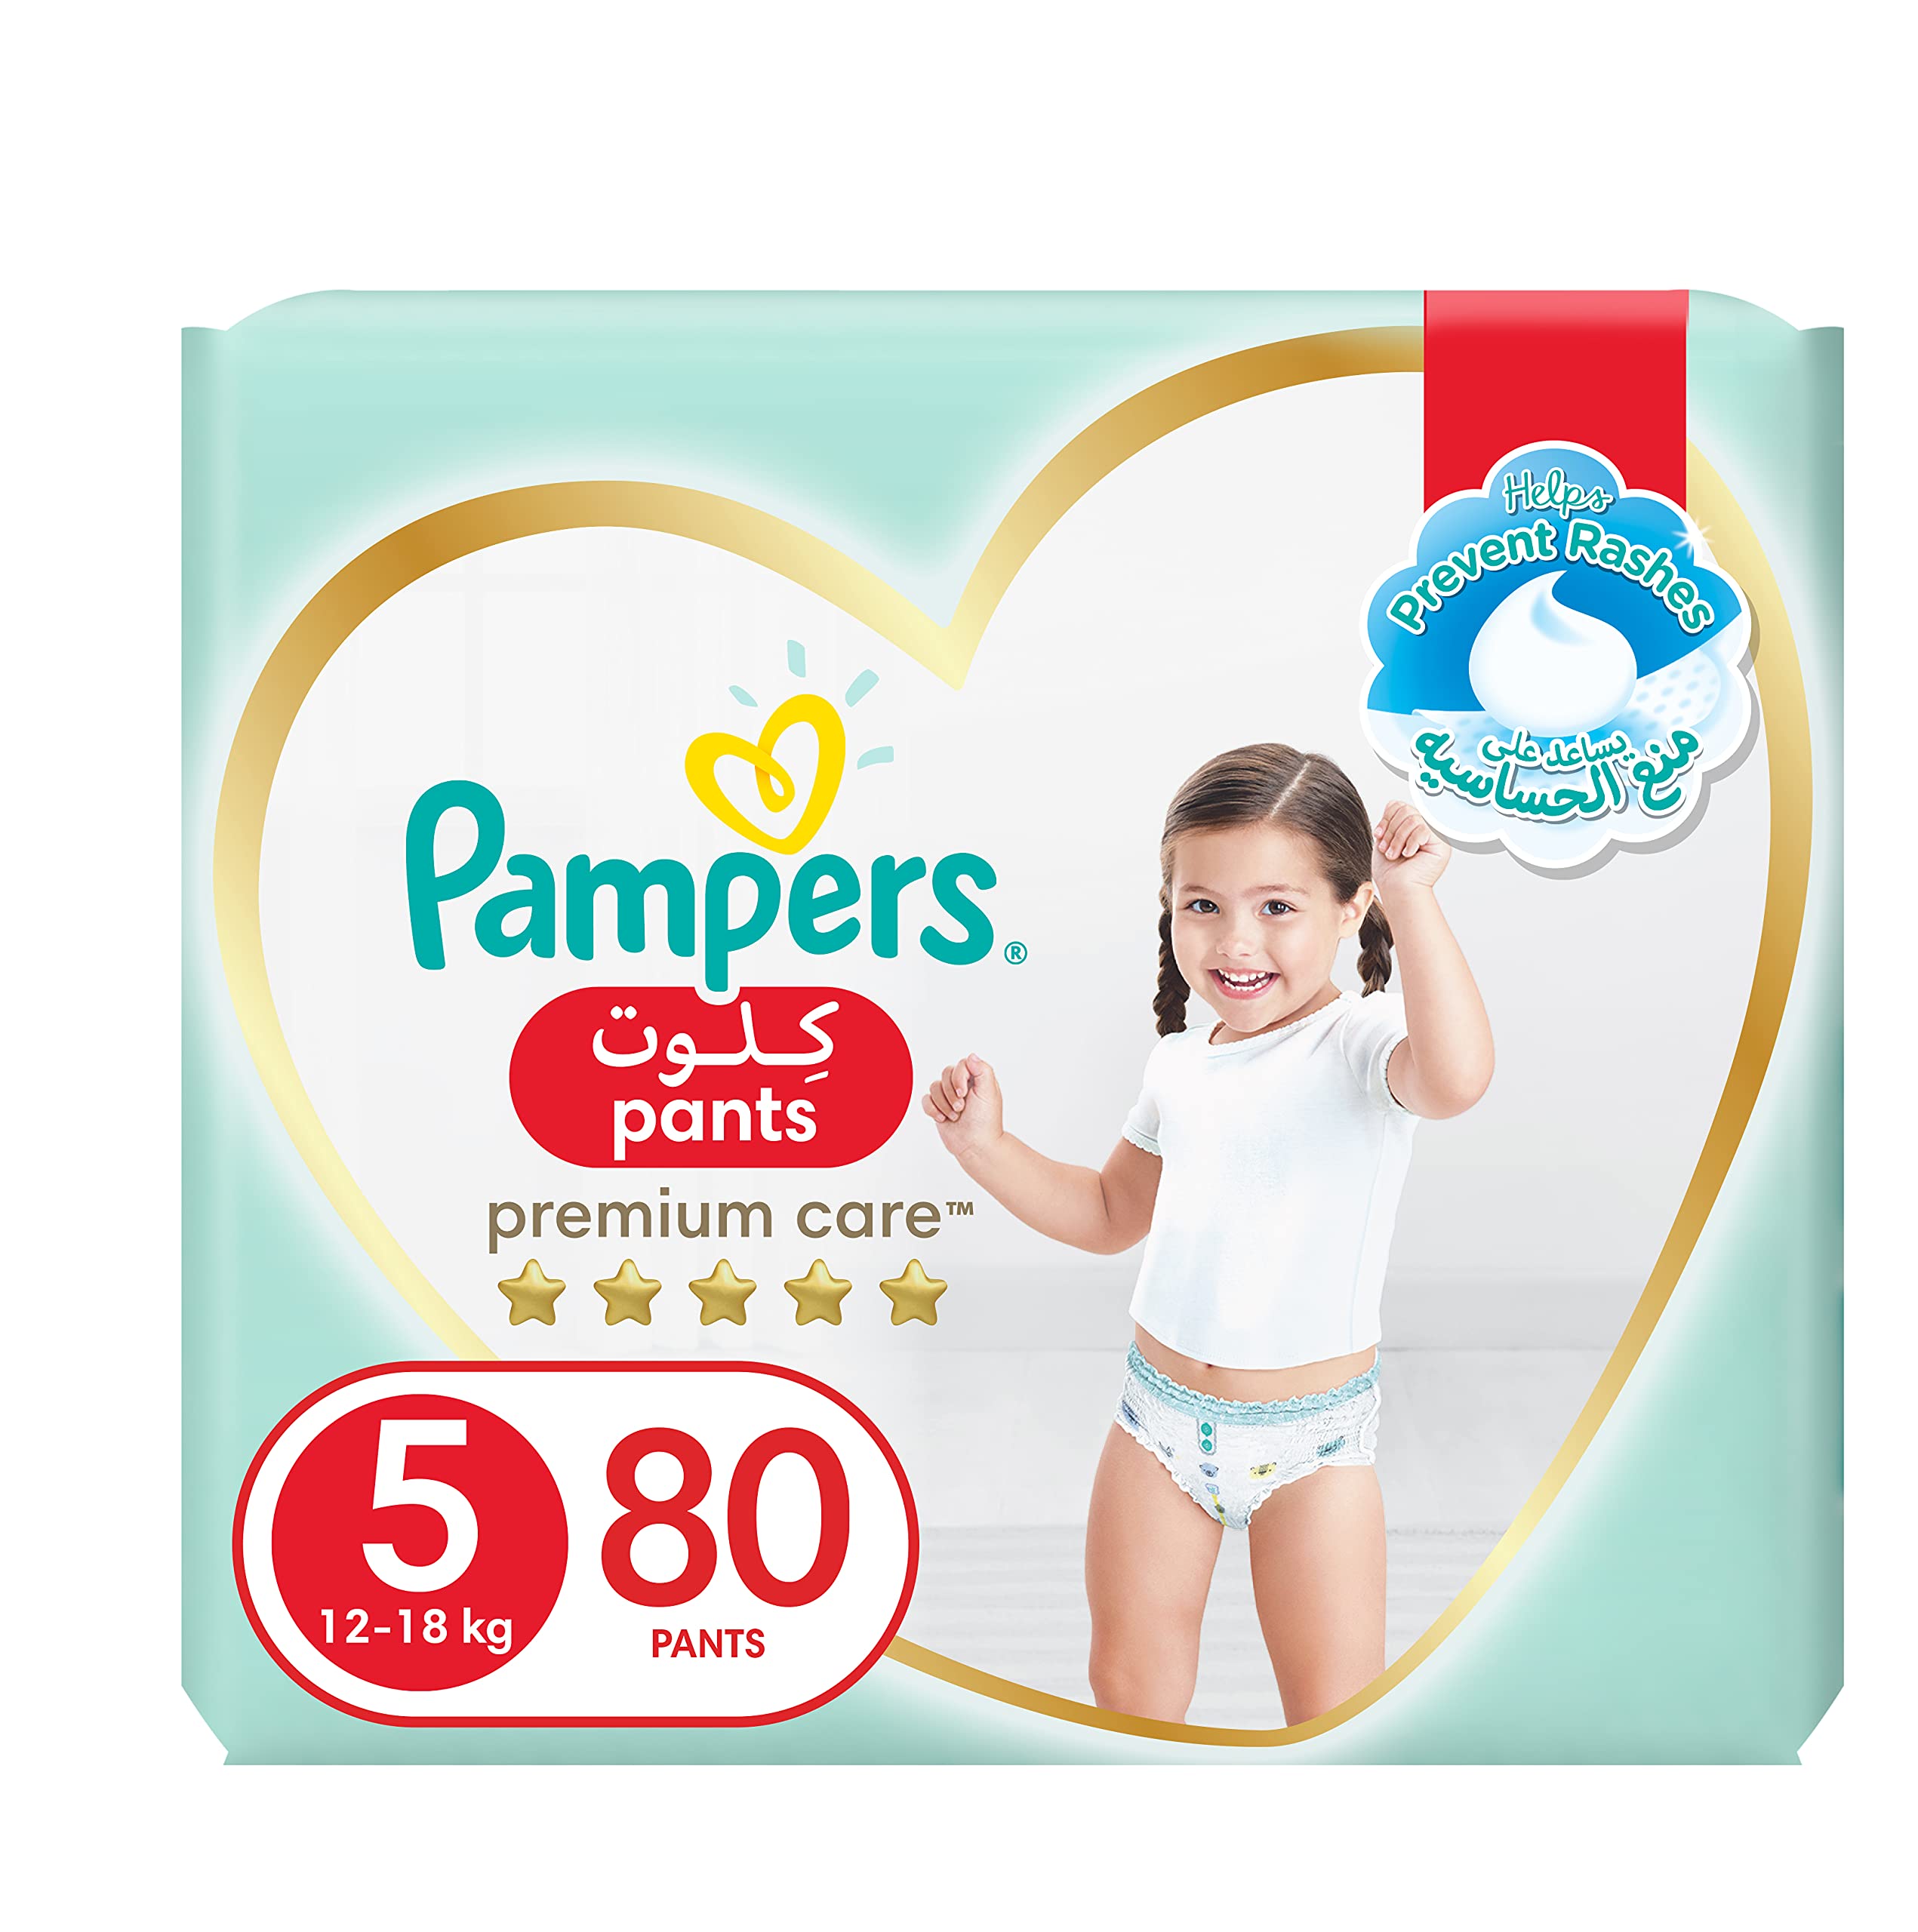 Pampers Premium Care Pants Diapers, Size 5, 12-18Kg, The Softest Diaper With Stretchy Sides For Better Fit, 80 Baby Diapers حفاضات بتصميم سراويل للاطفال للعناية الفائقة من بامبرز - مقاس 5، حجم صغير، 12-18 كغم، عبوة ضخمة مزدوجة، 80 قطعة